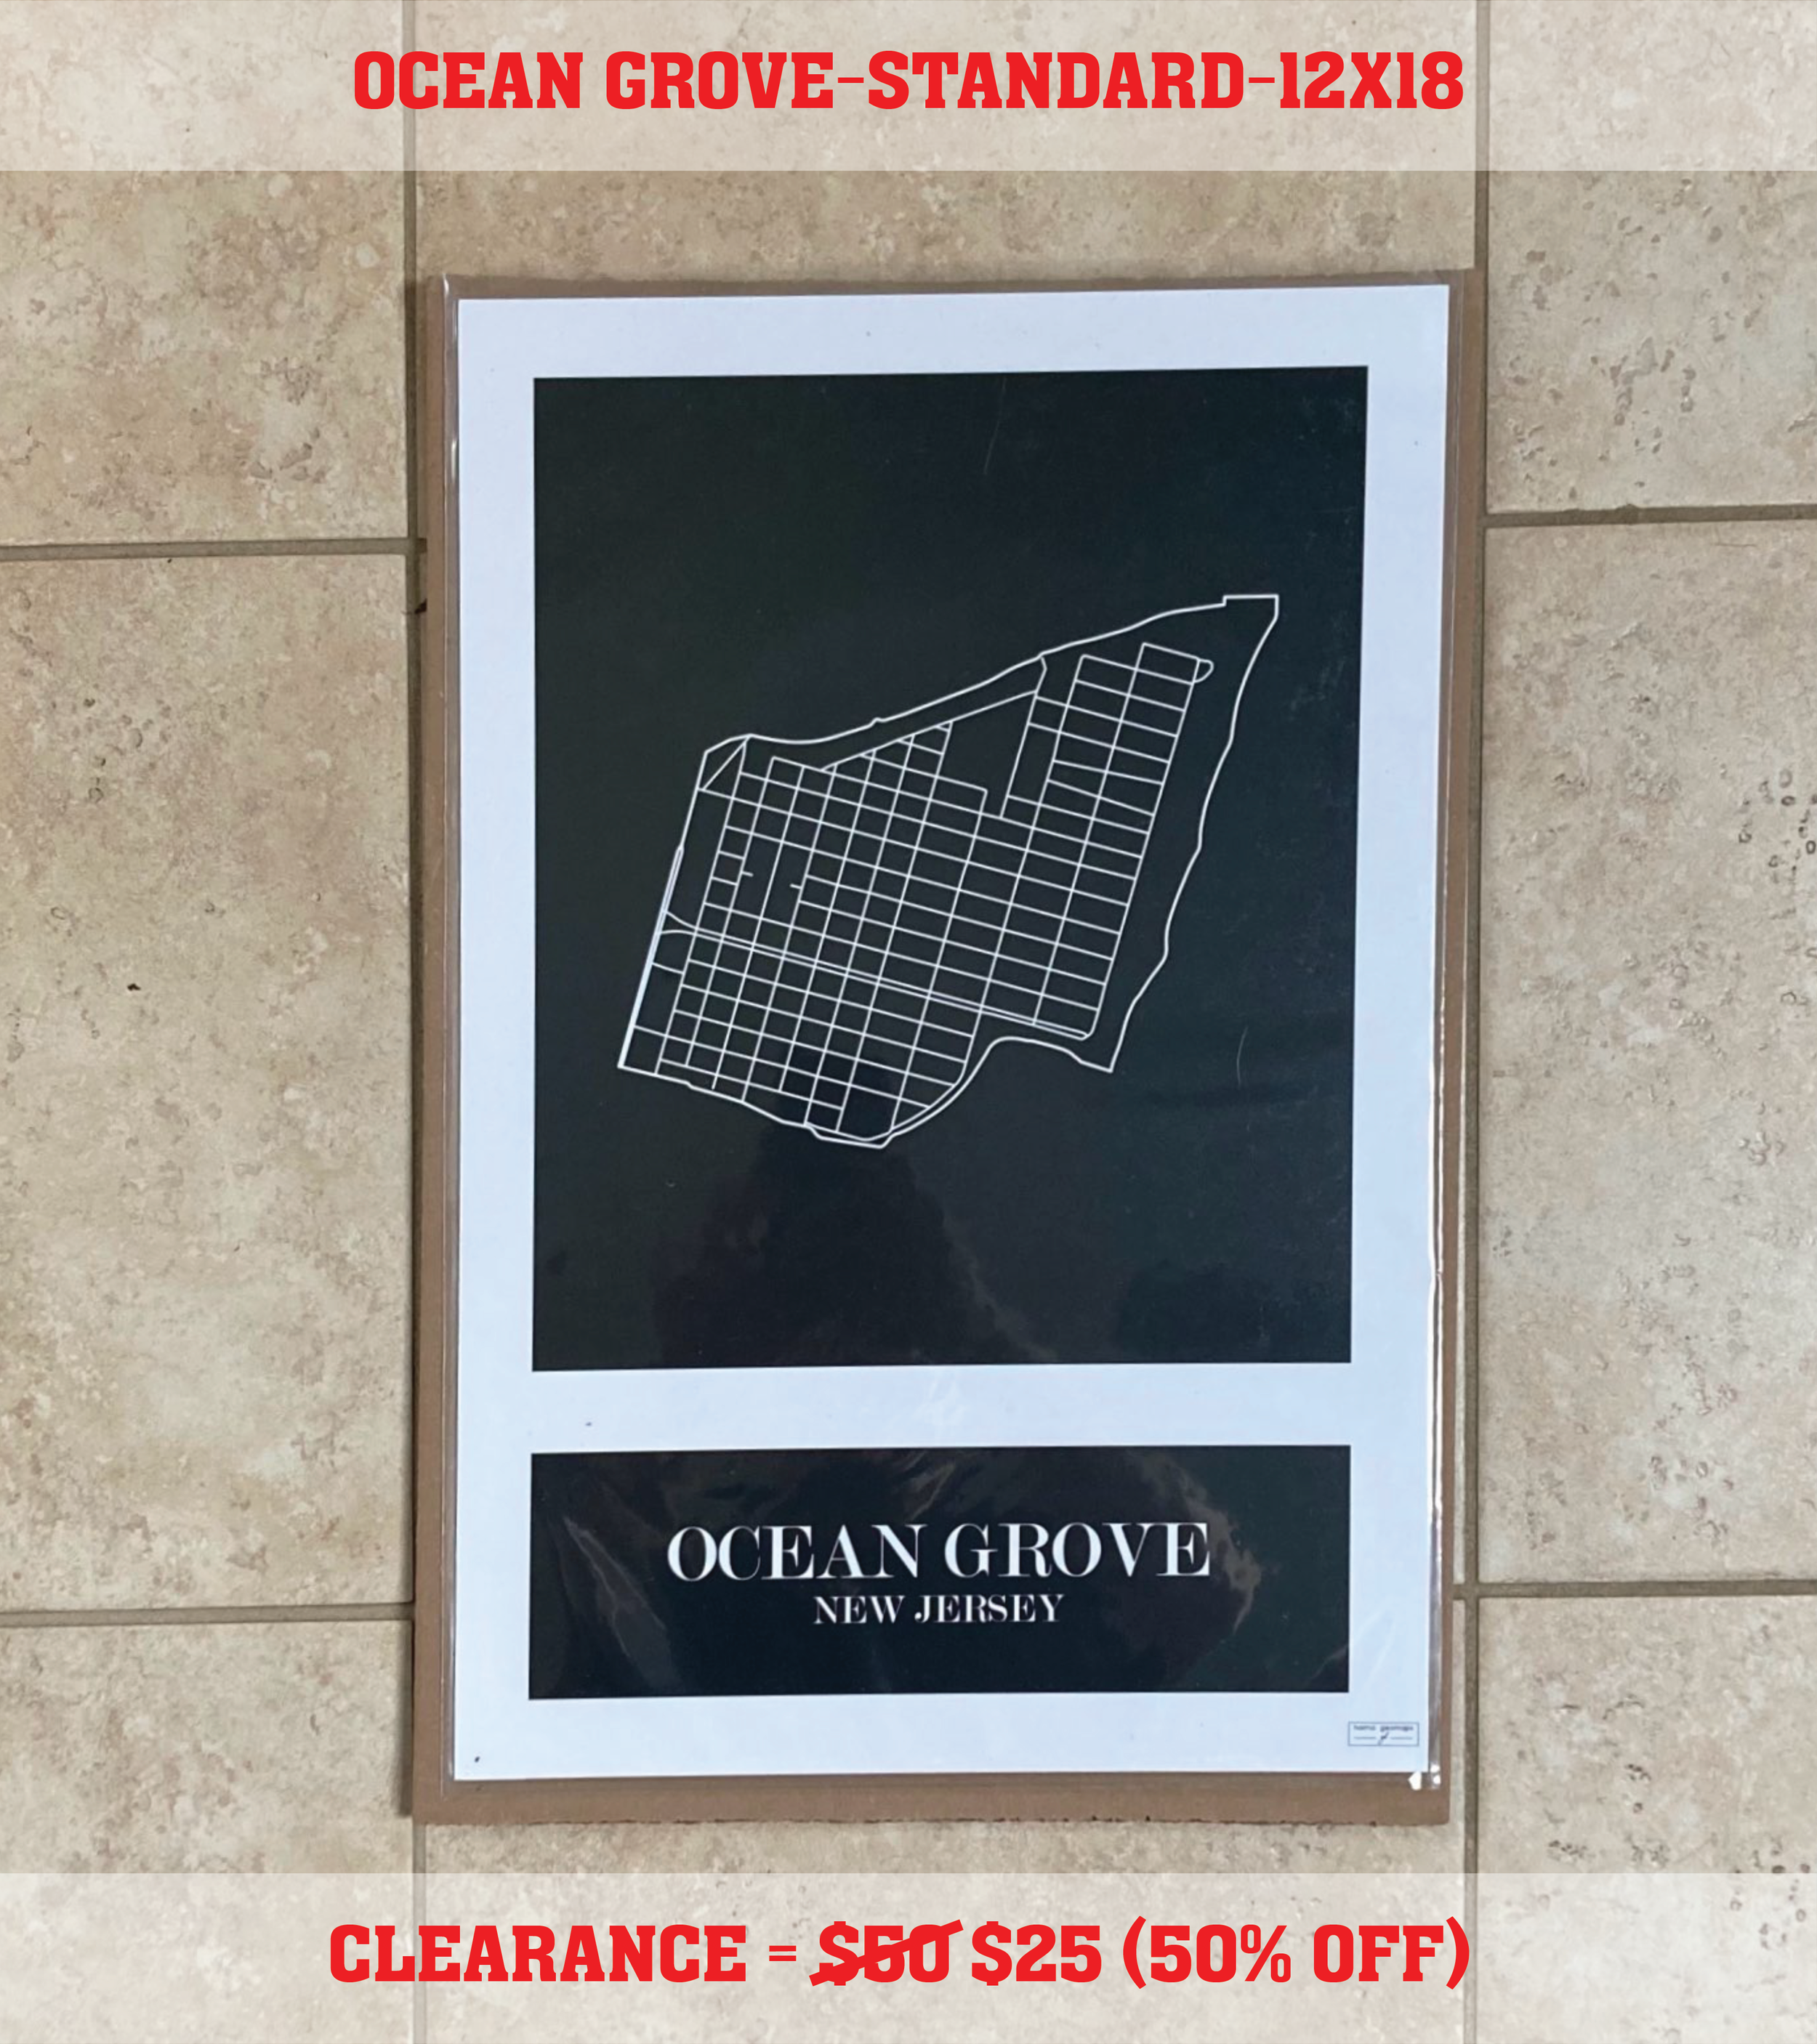 Ocean Grove (12x18) Standard